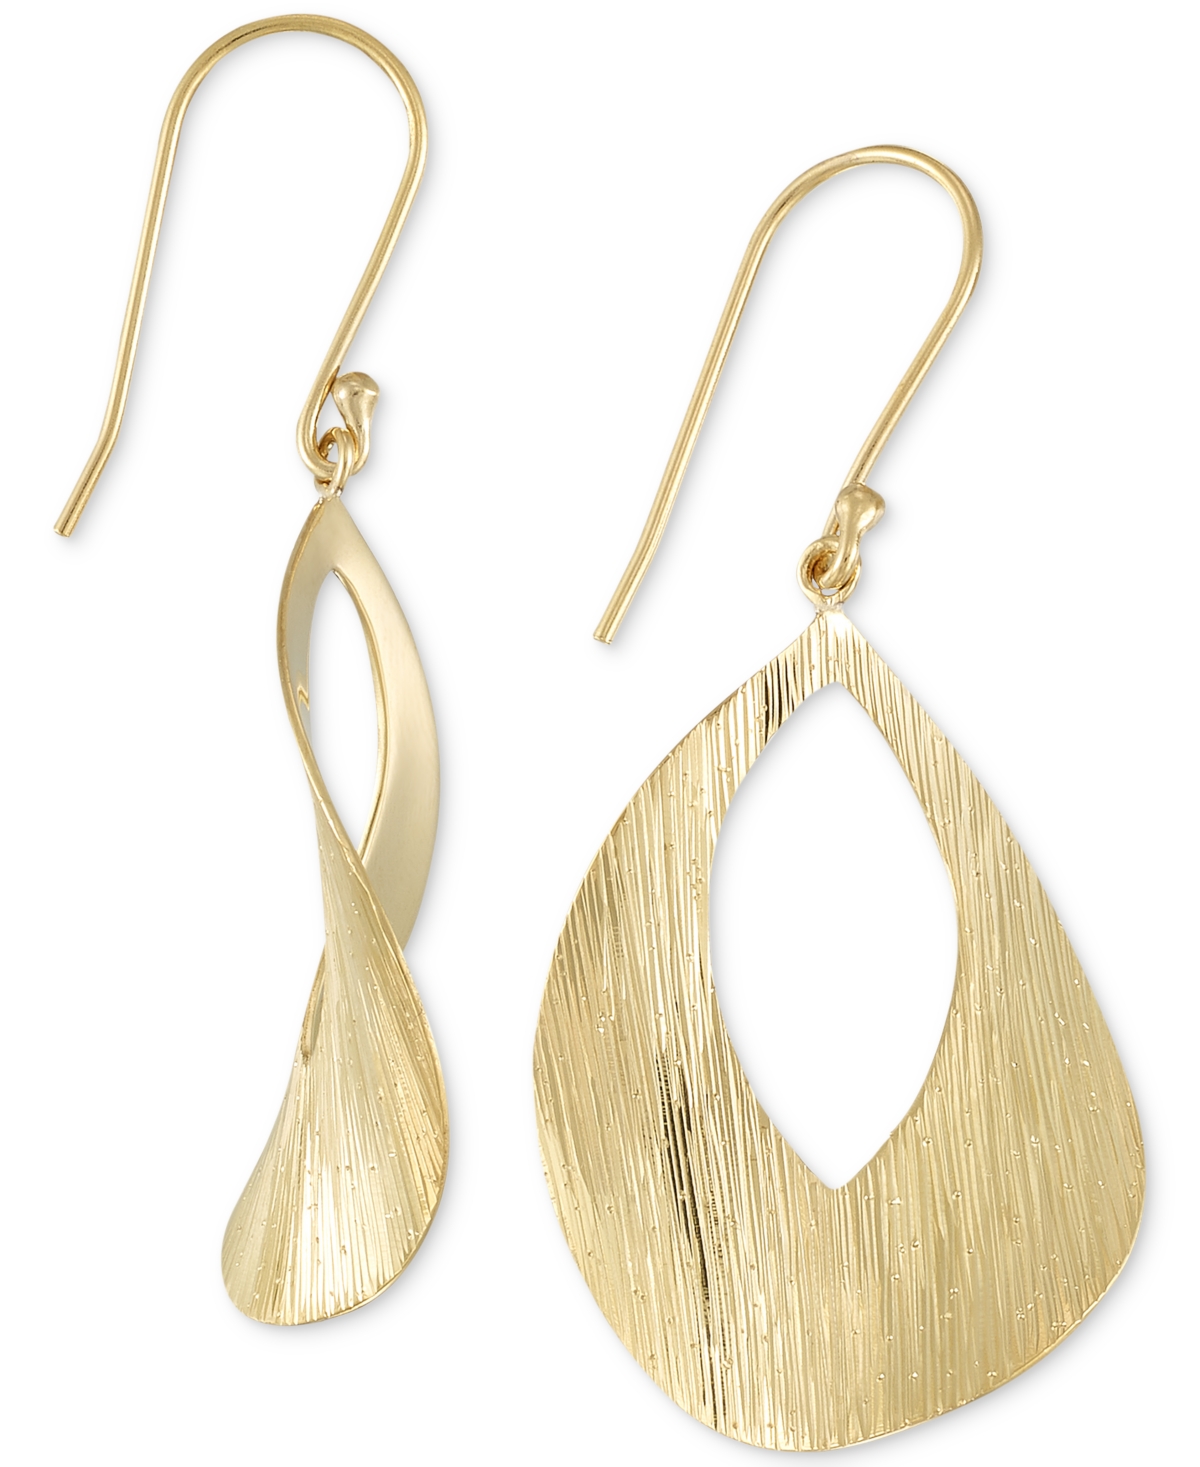 Simone I. Smith Textured Drop Earrings In 18k Gold Over Sterling Silver In K Gold Over Silver